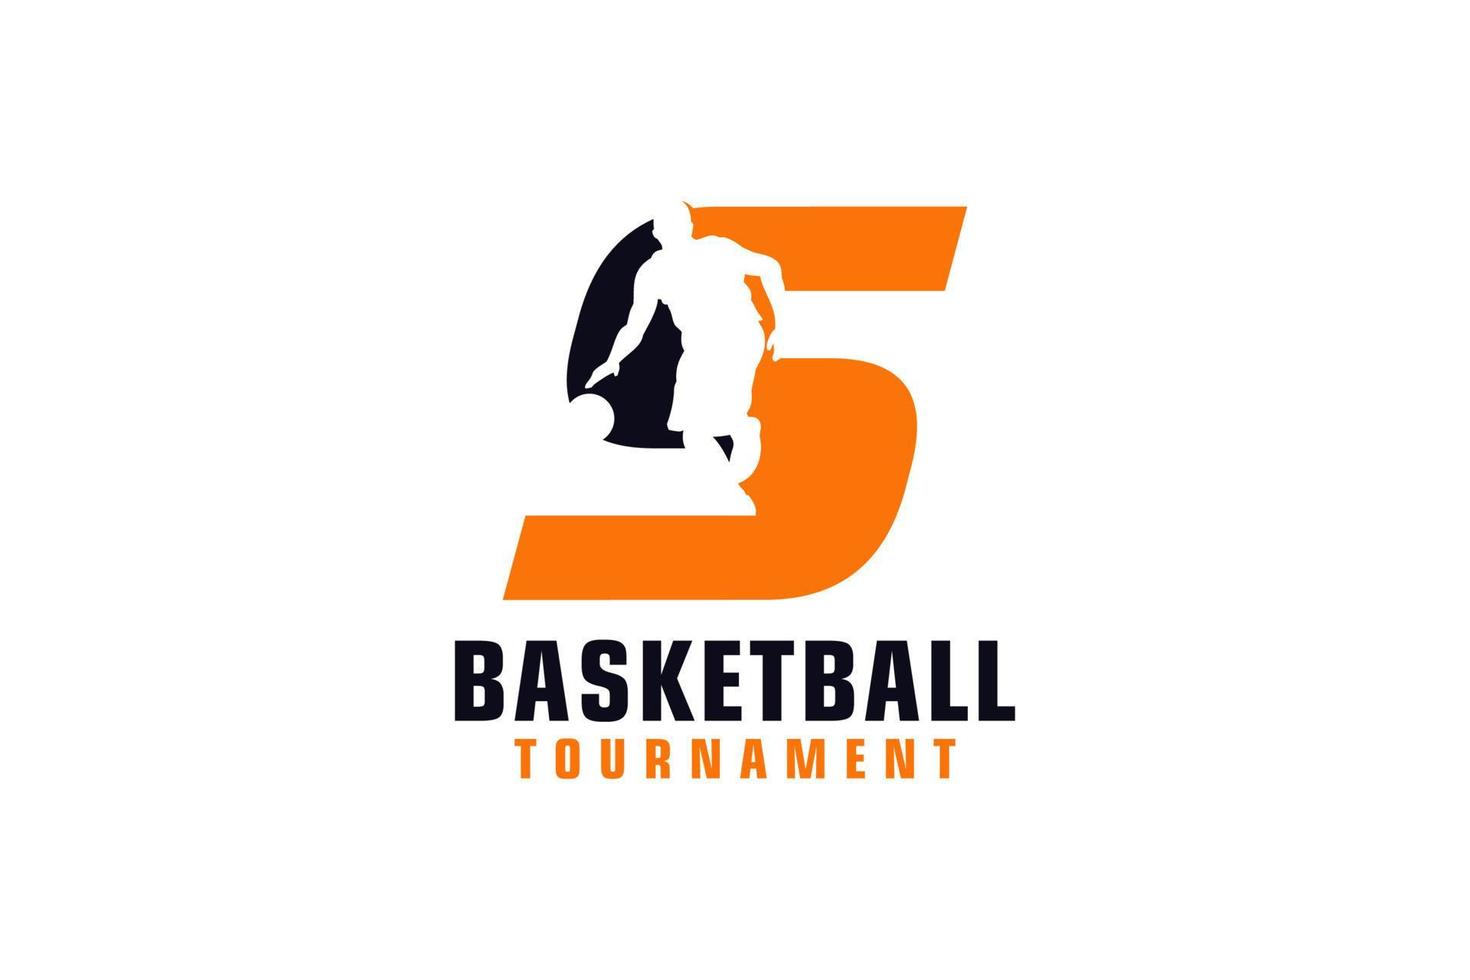 letra s com design de logotipo de basquete. elementos de modelo de design vetorial para equipe esportiva ou identidade corporativa. vetor